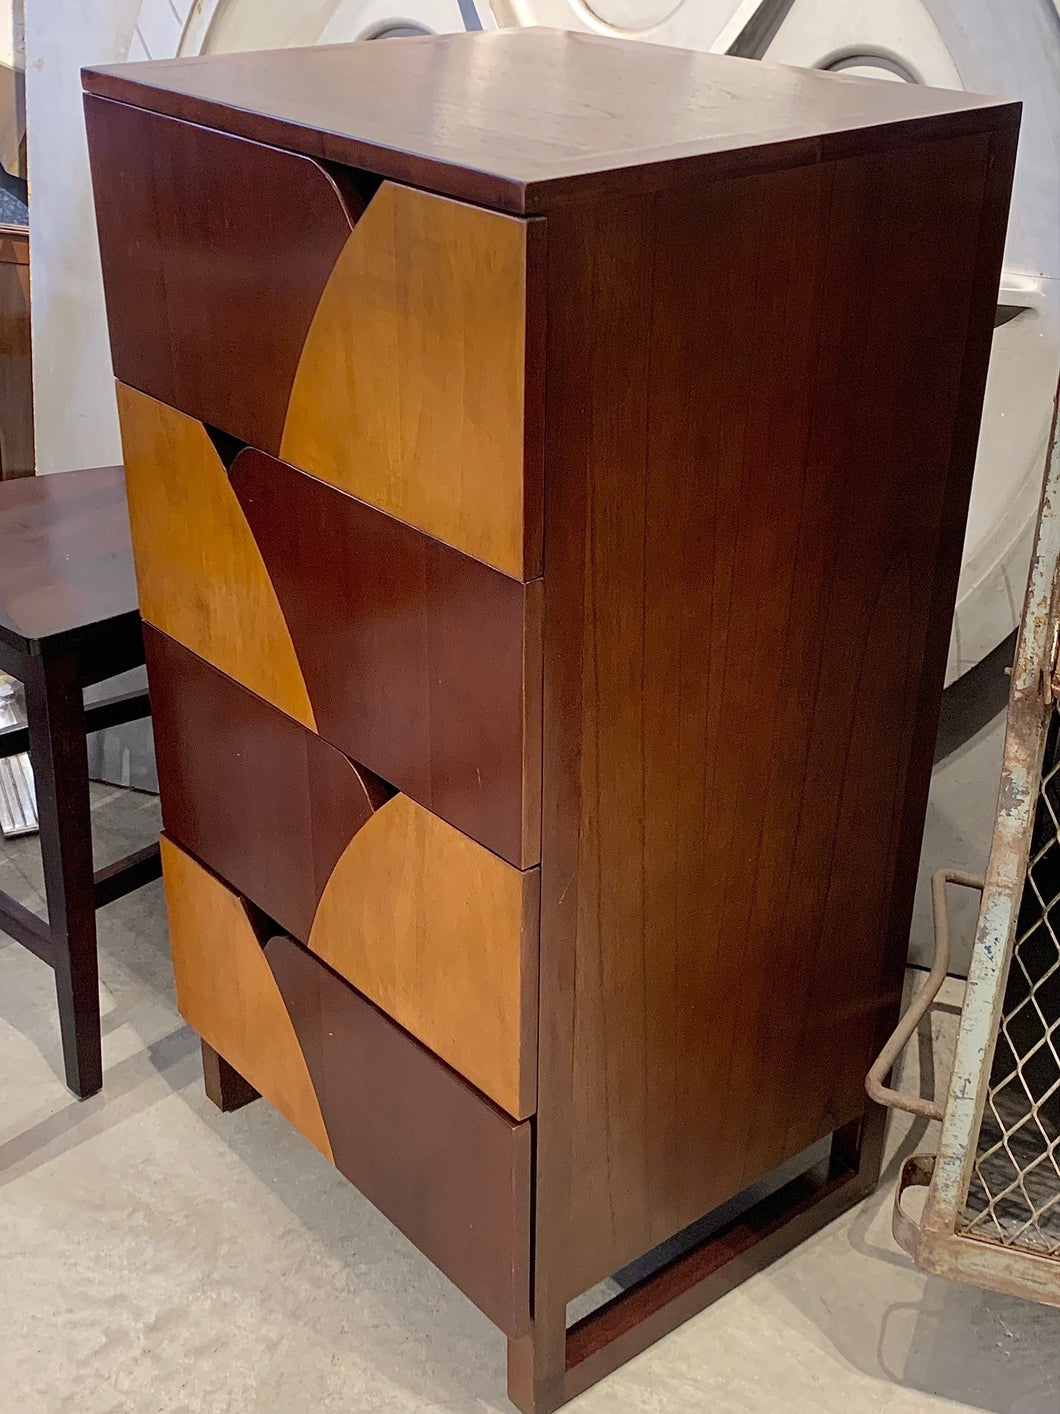 Lovely two-toned wood dresser